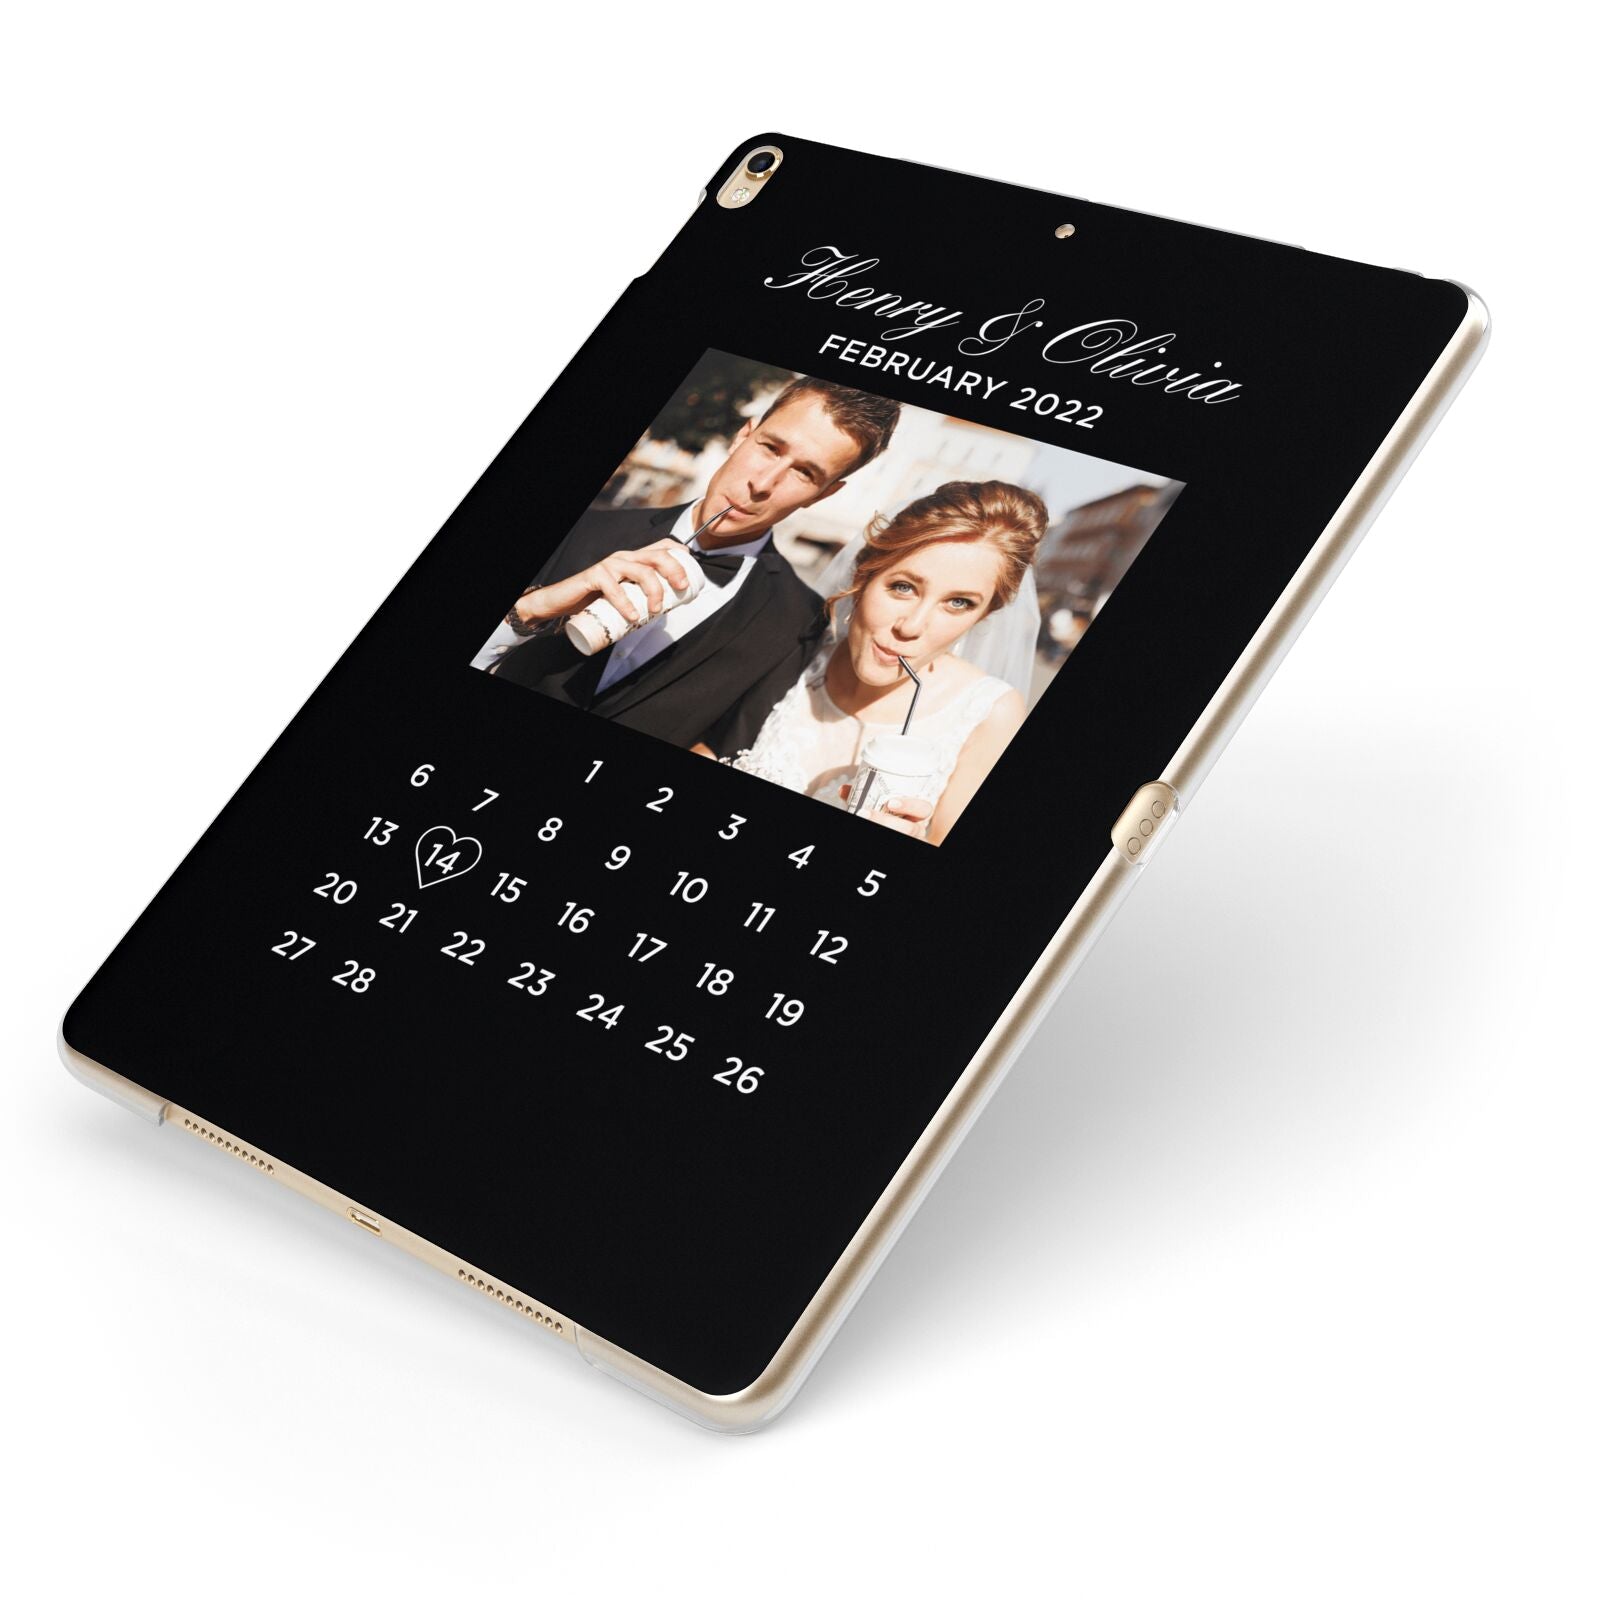 Milestone Date Personalised Photo Apple iPad Case on Gold iPad Side View